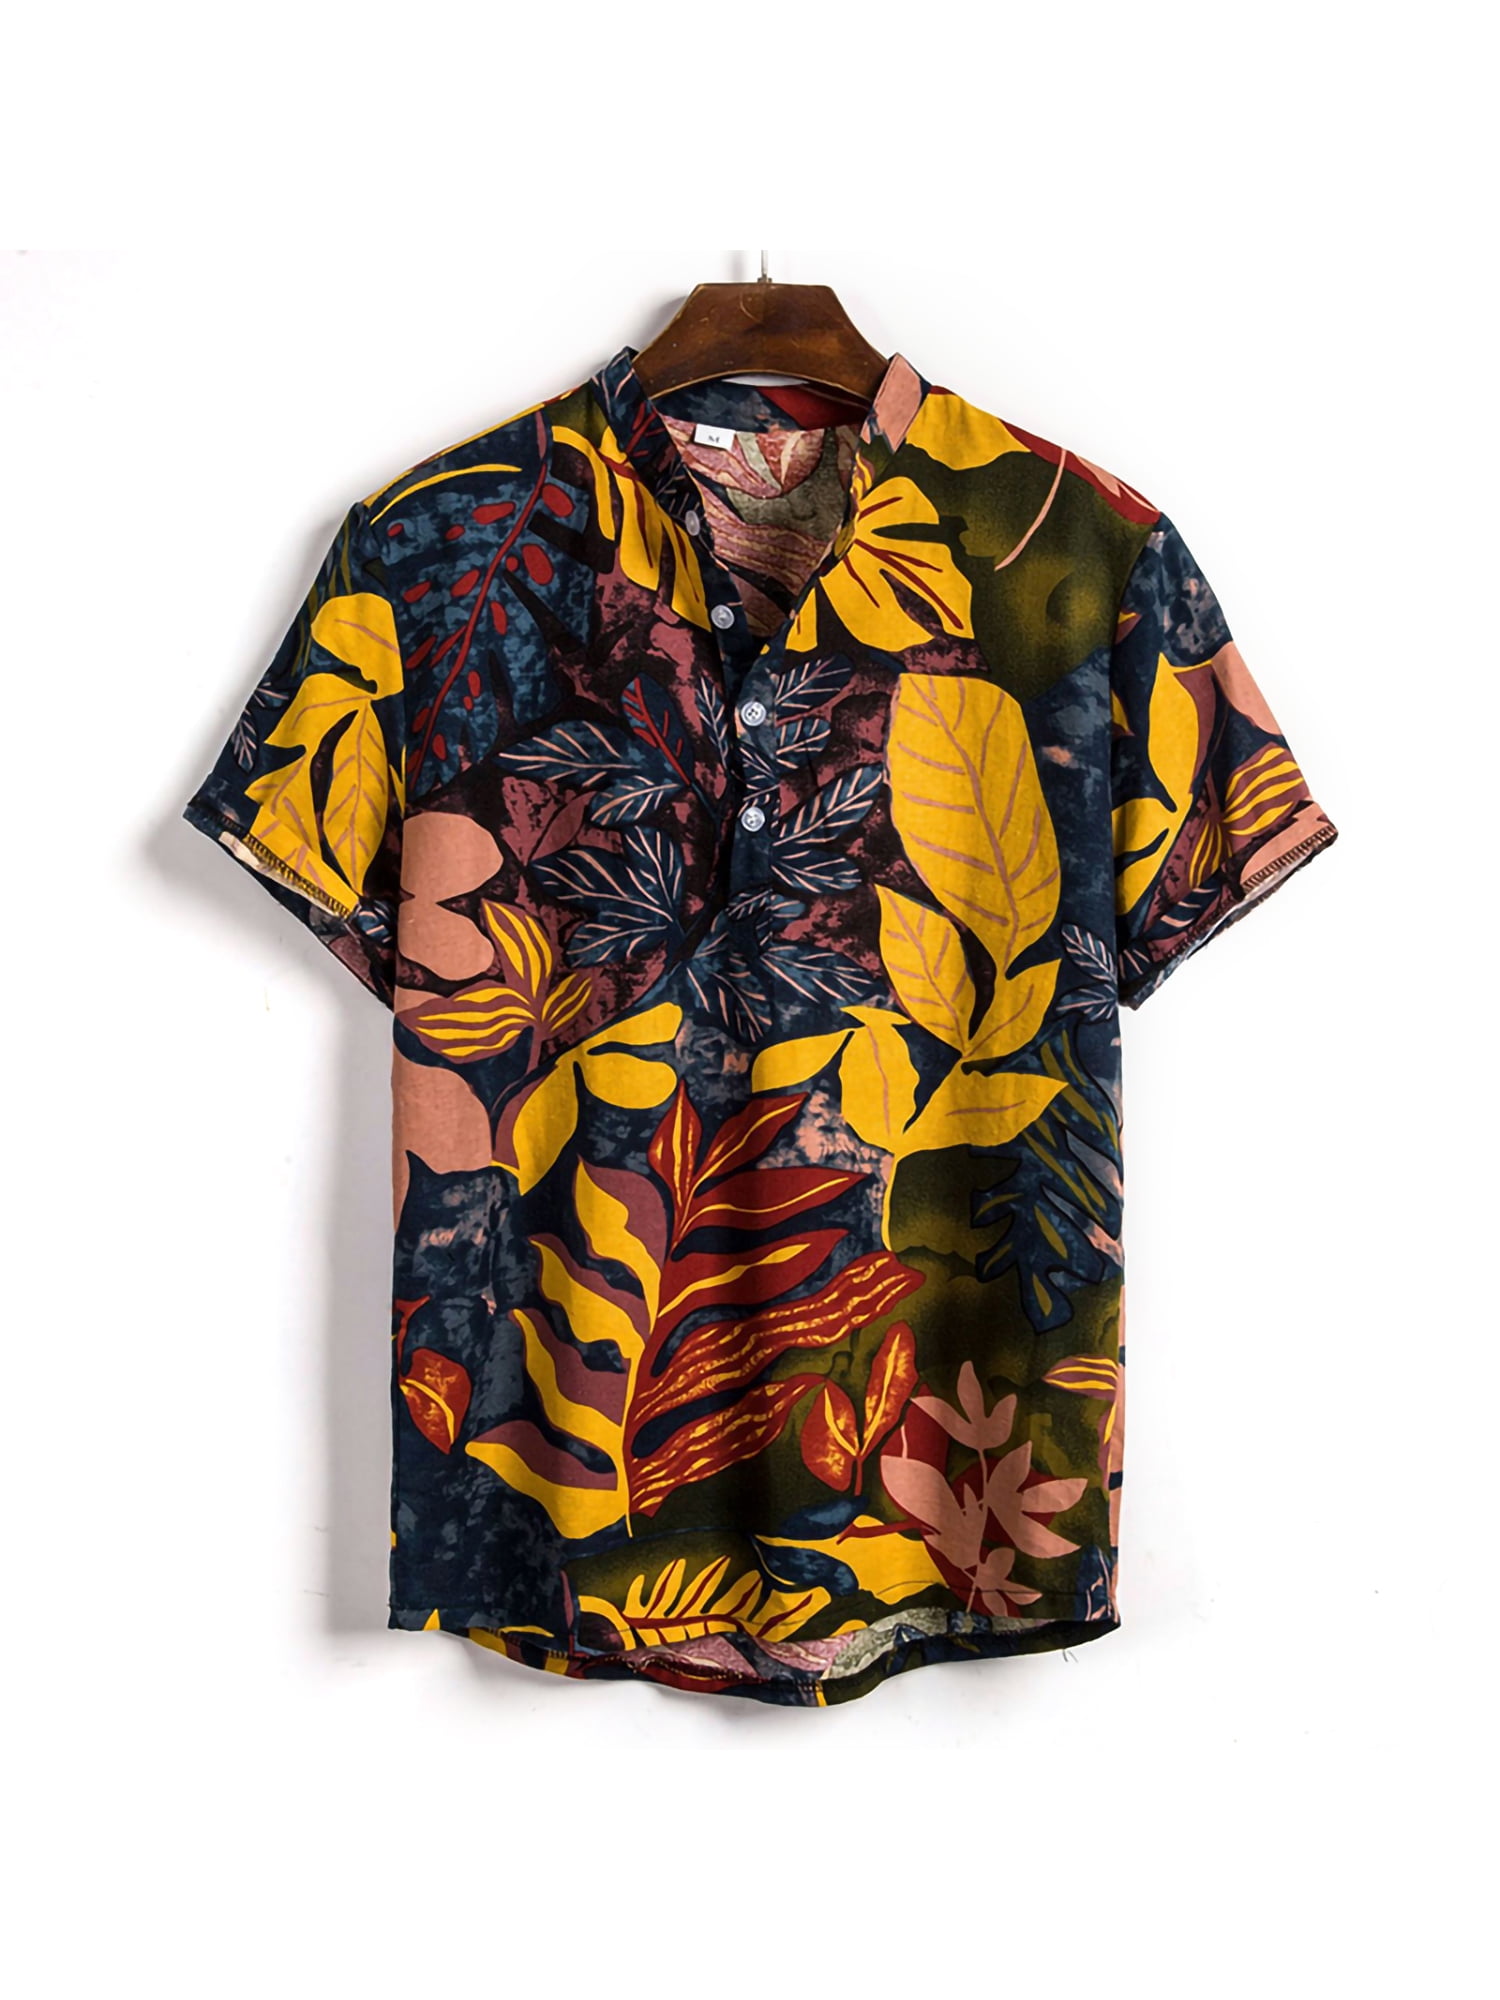 Men's Summer Short Sleeve Hawaiian Floral T Shirt Beach Party Casual Blouse Tops